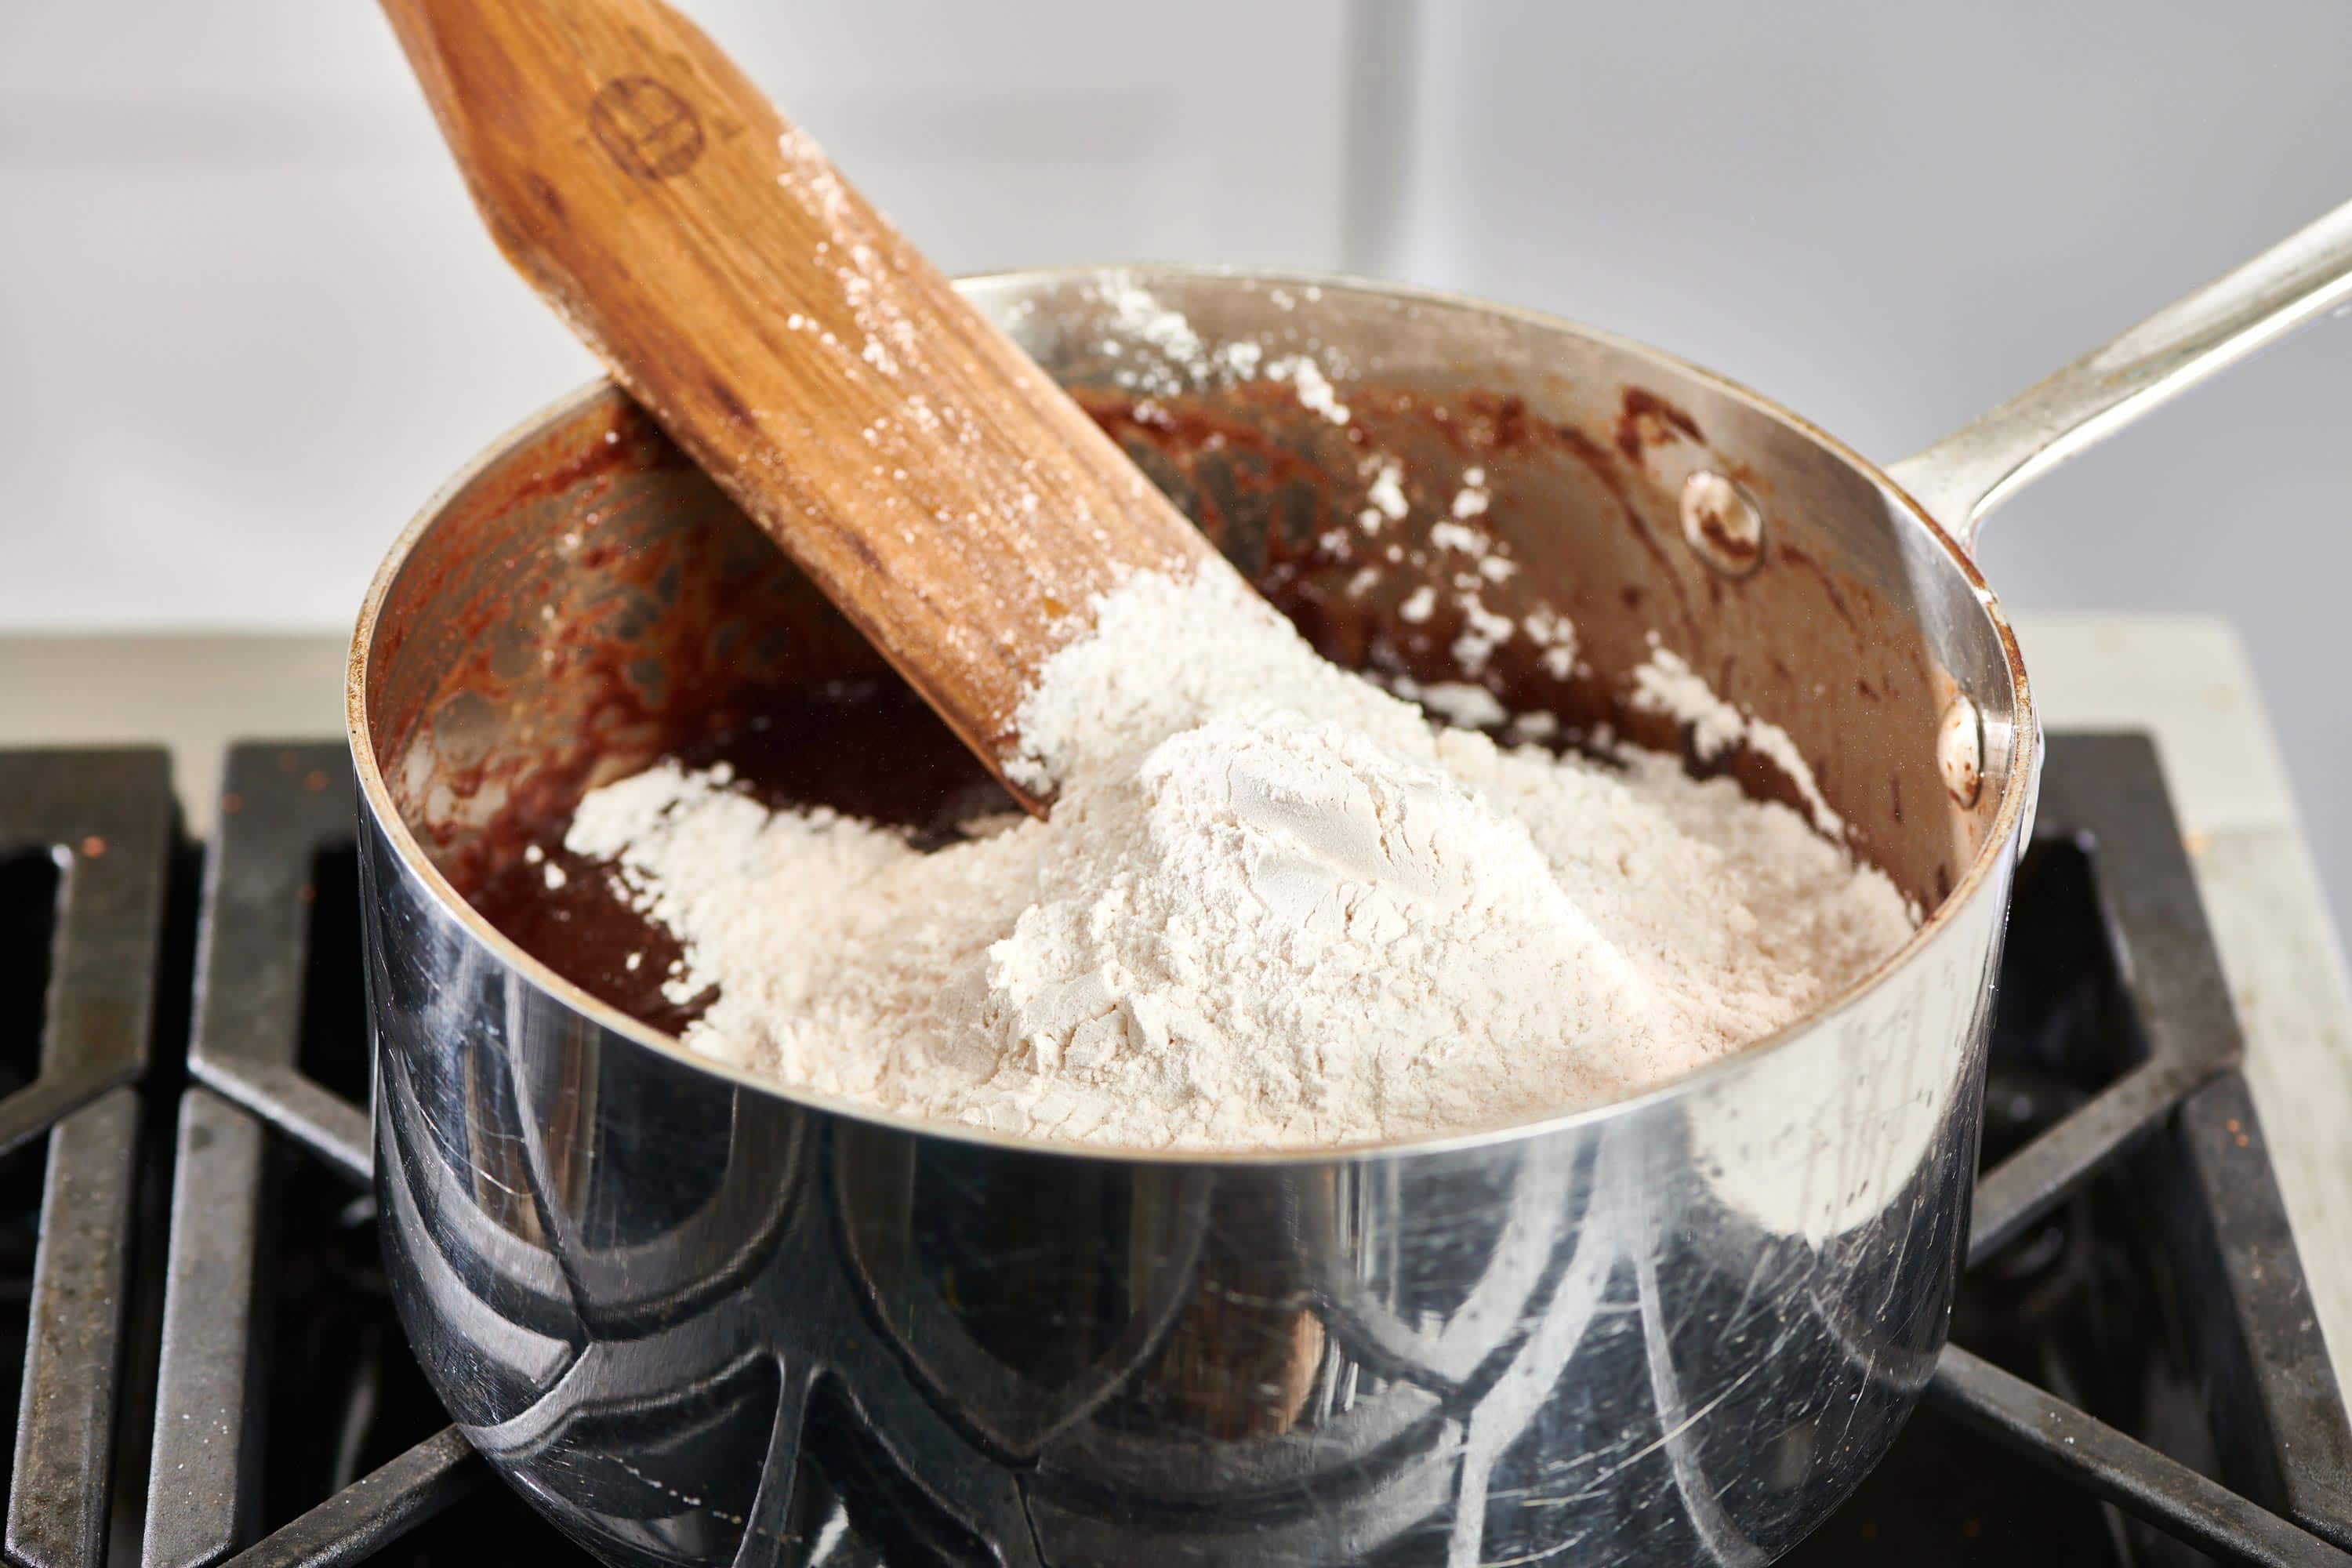 Wooden spatula blending flour into a pot of chocolate.